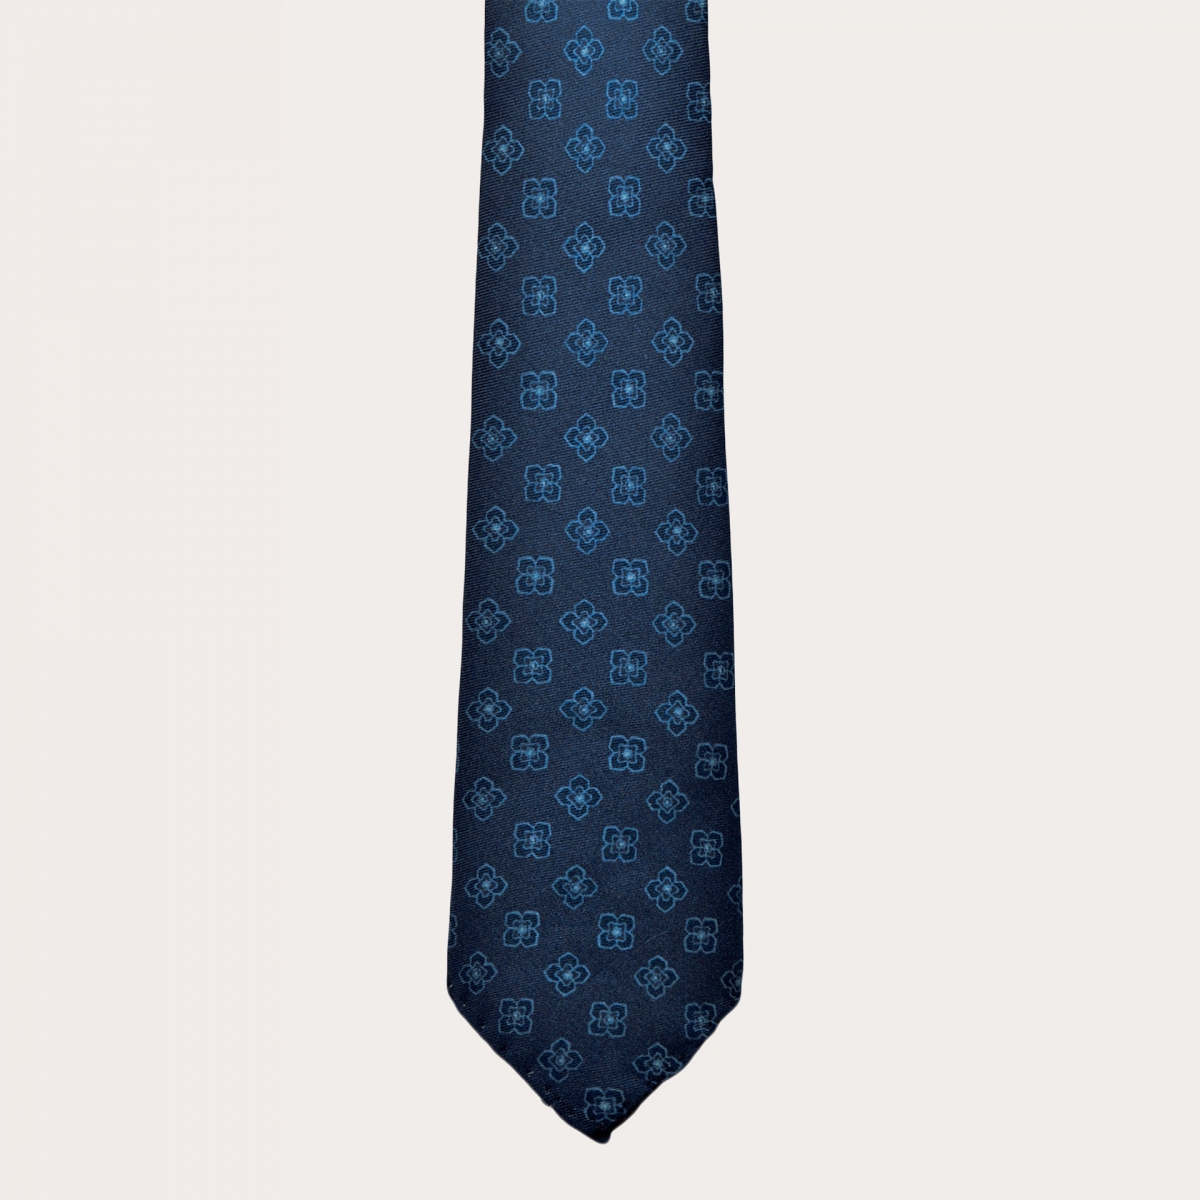 BRUCLE Set cravatta e fazzoletto da taschino in seta, fantasia blu a fiori